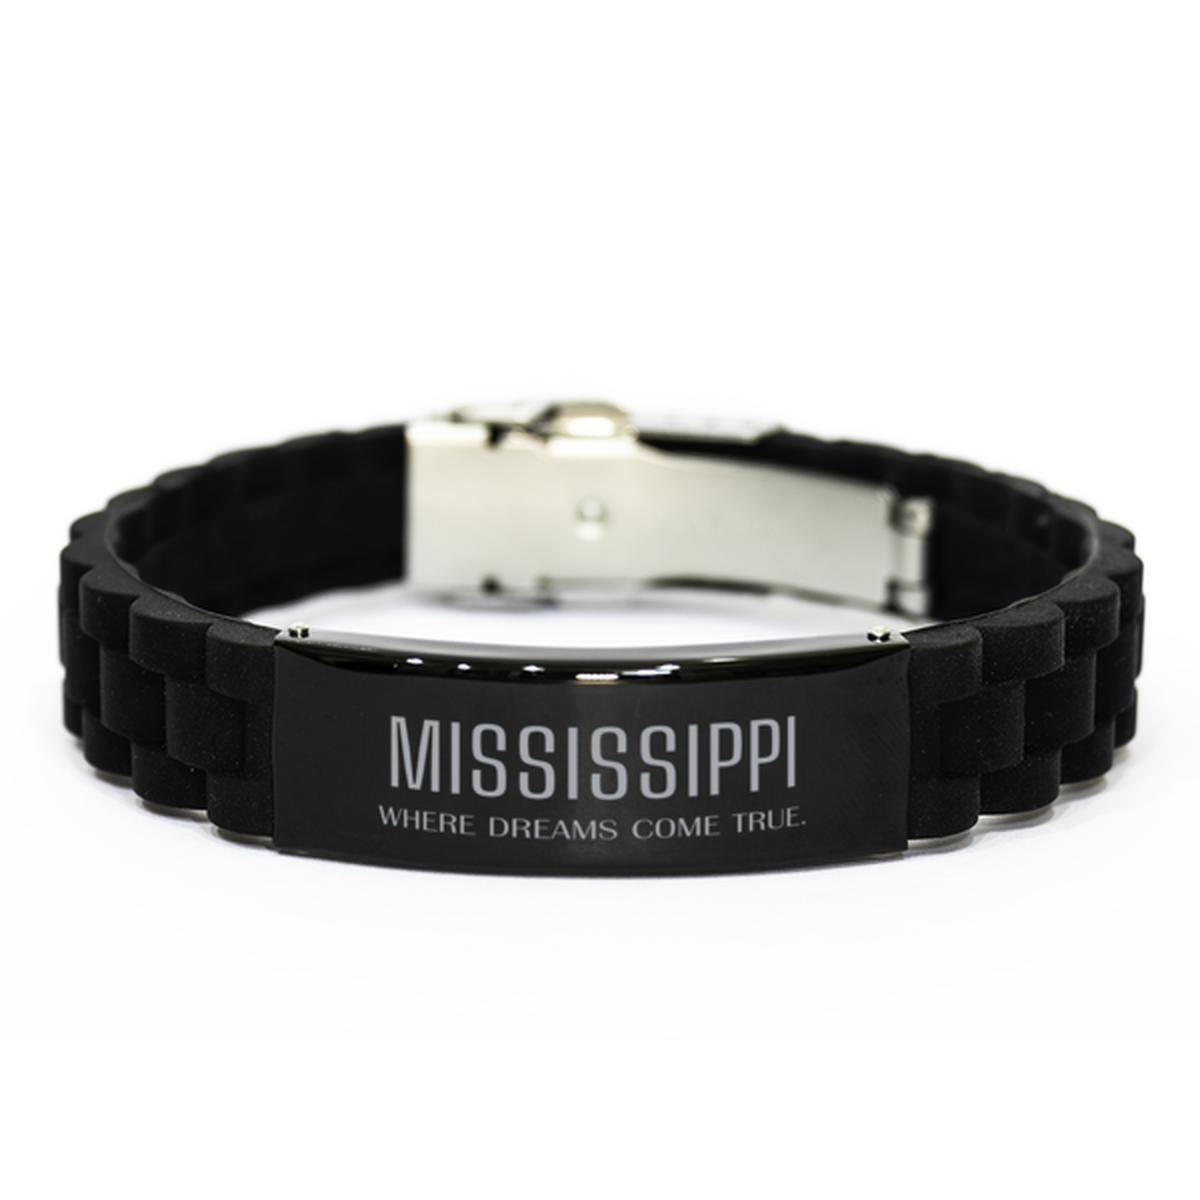 Love Mississippi State Black Glidelock Clasp Bracelet, Mississippi Where dreams come true, Birthday Inspirational Gifts For Mississippi Men, Women, Friends